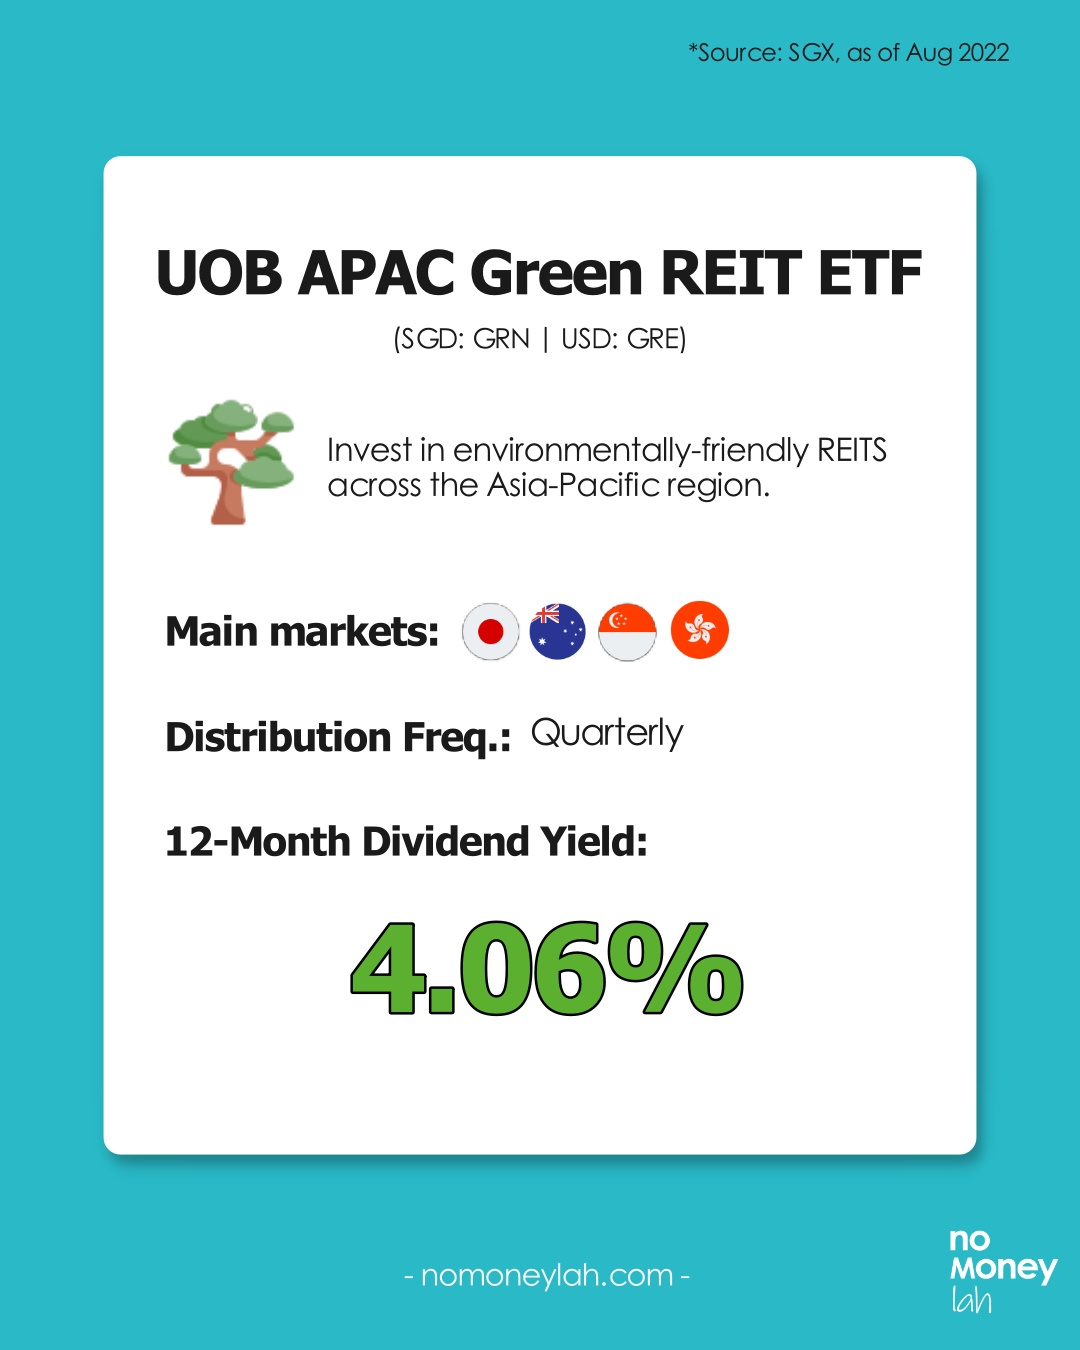 UOB APAC Green REIT ETF Overview (Source: SGX)